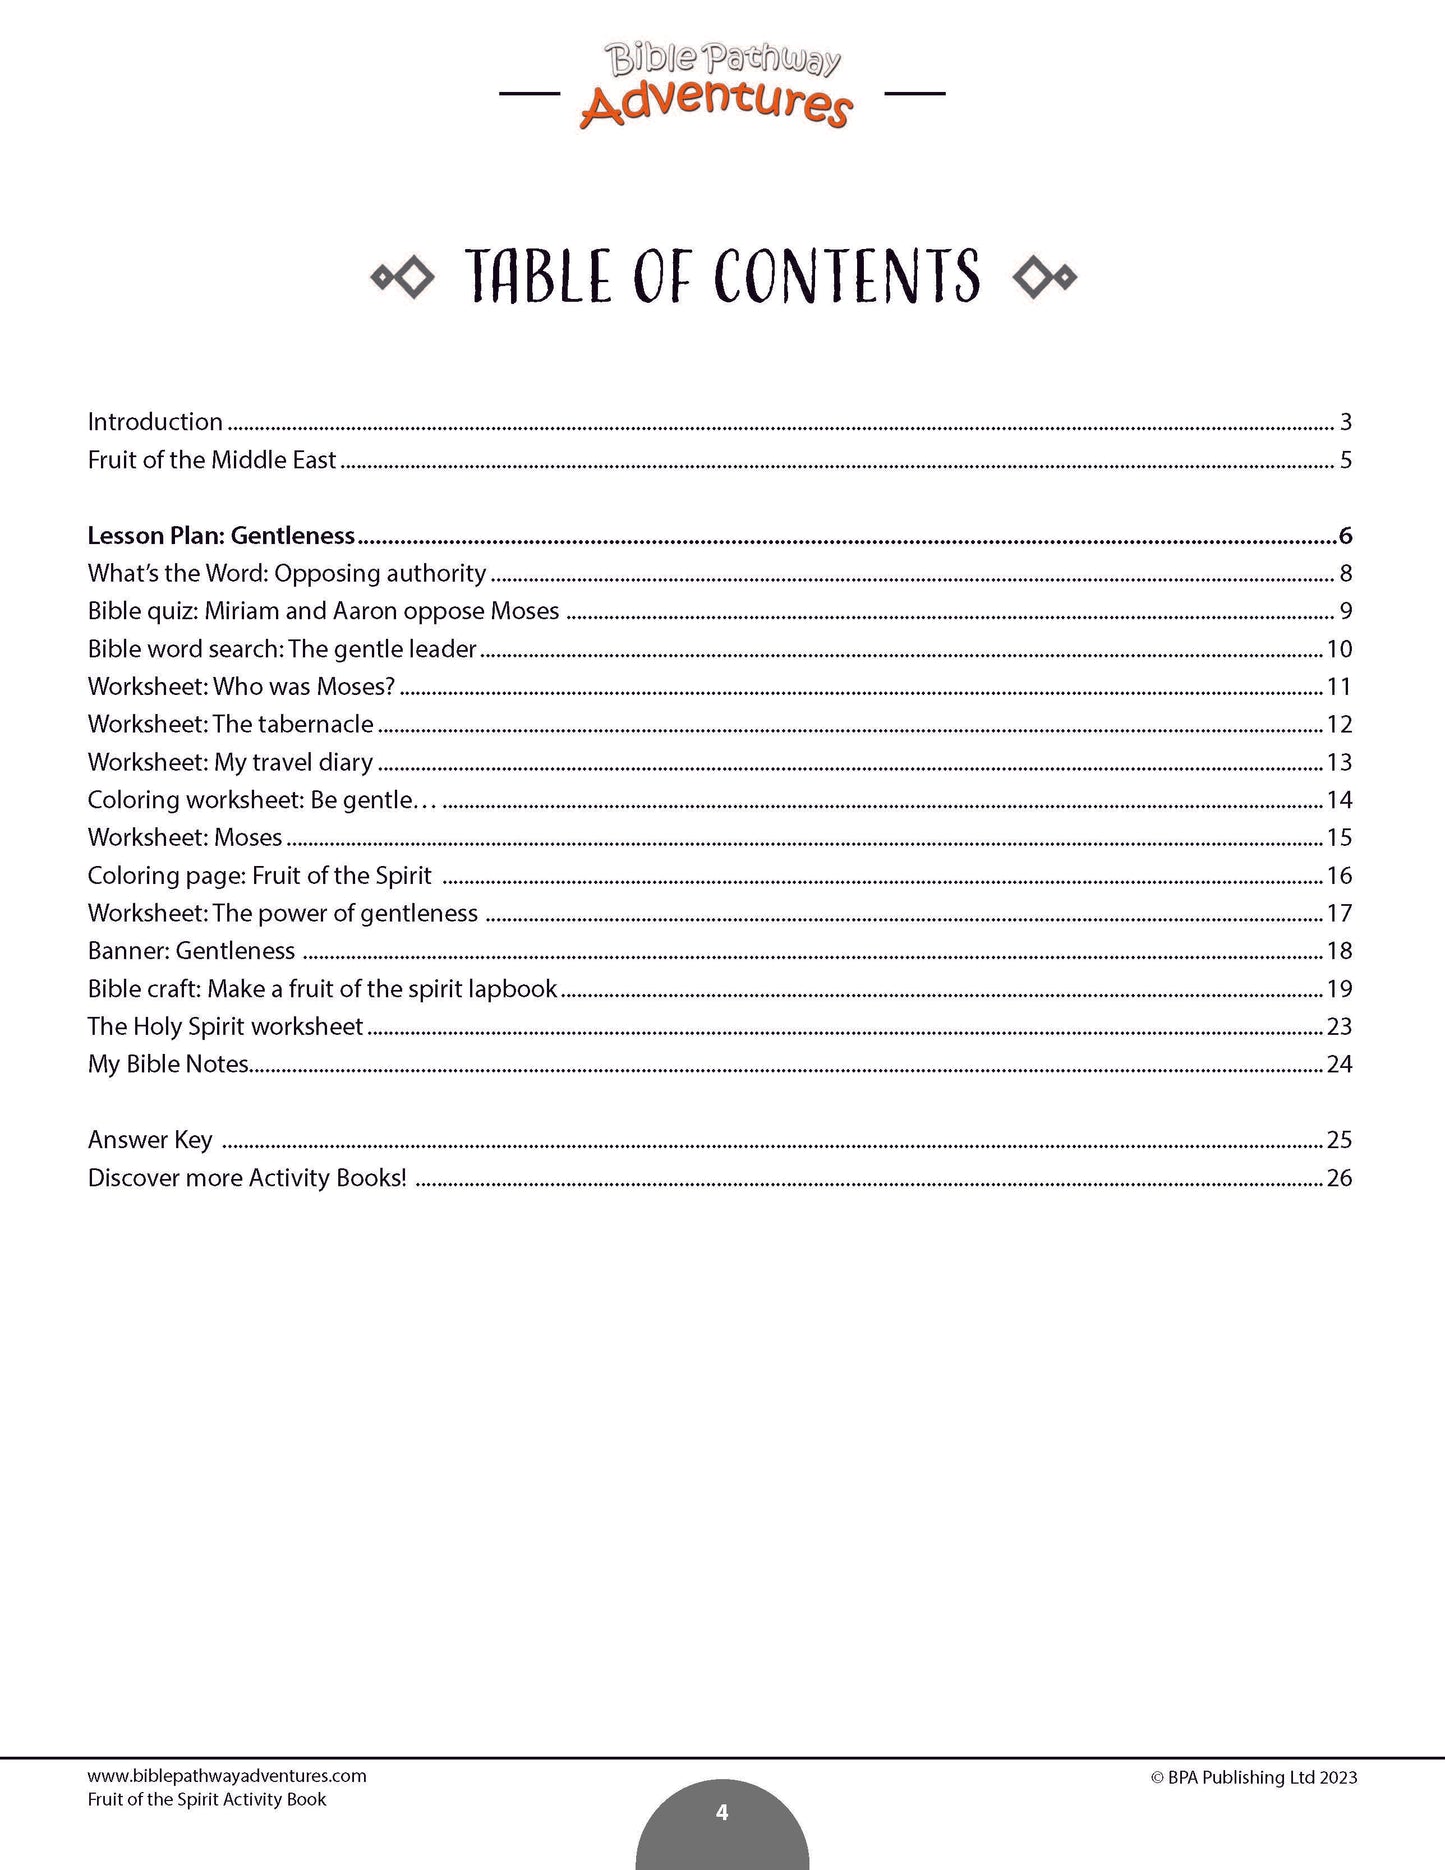 Gentleness: Fruit of the Spirit Activity Book (PDF)